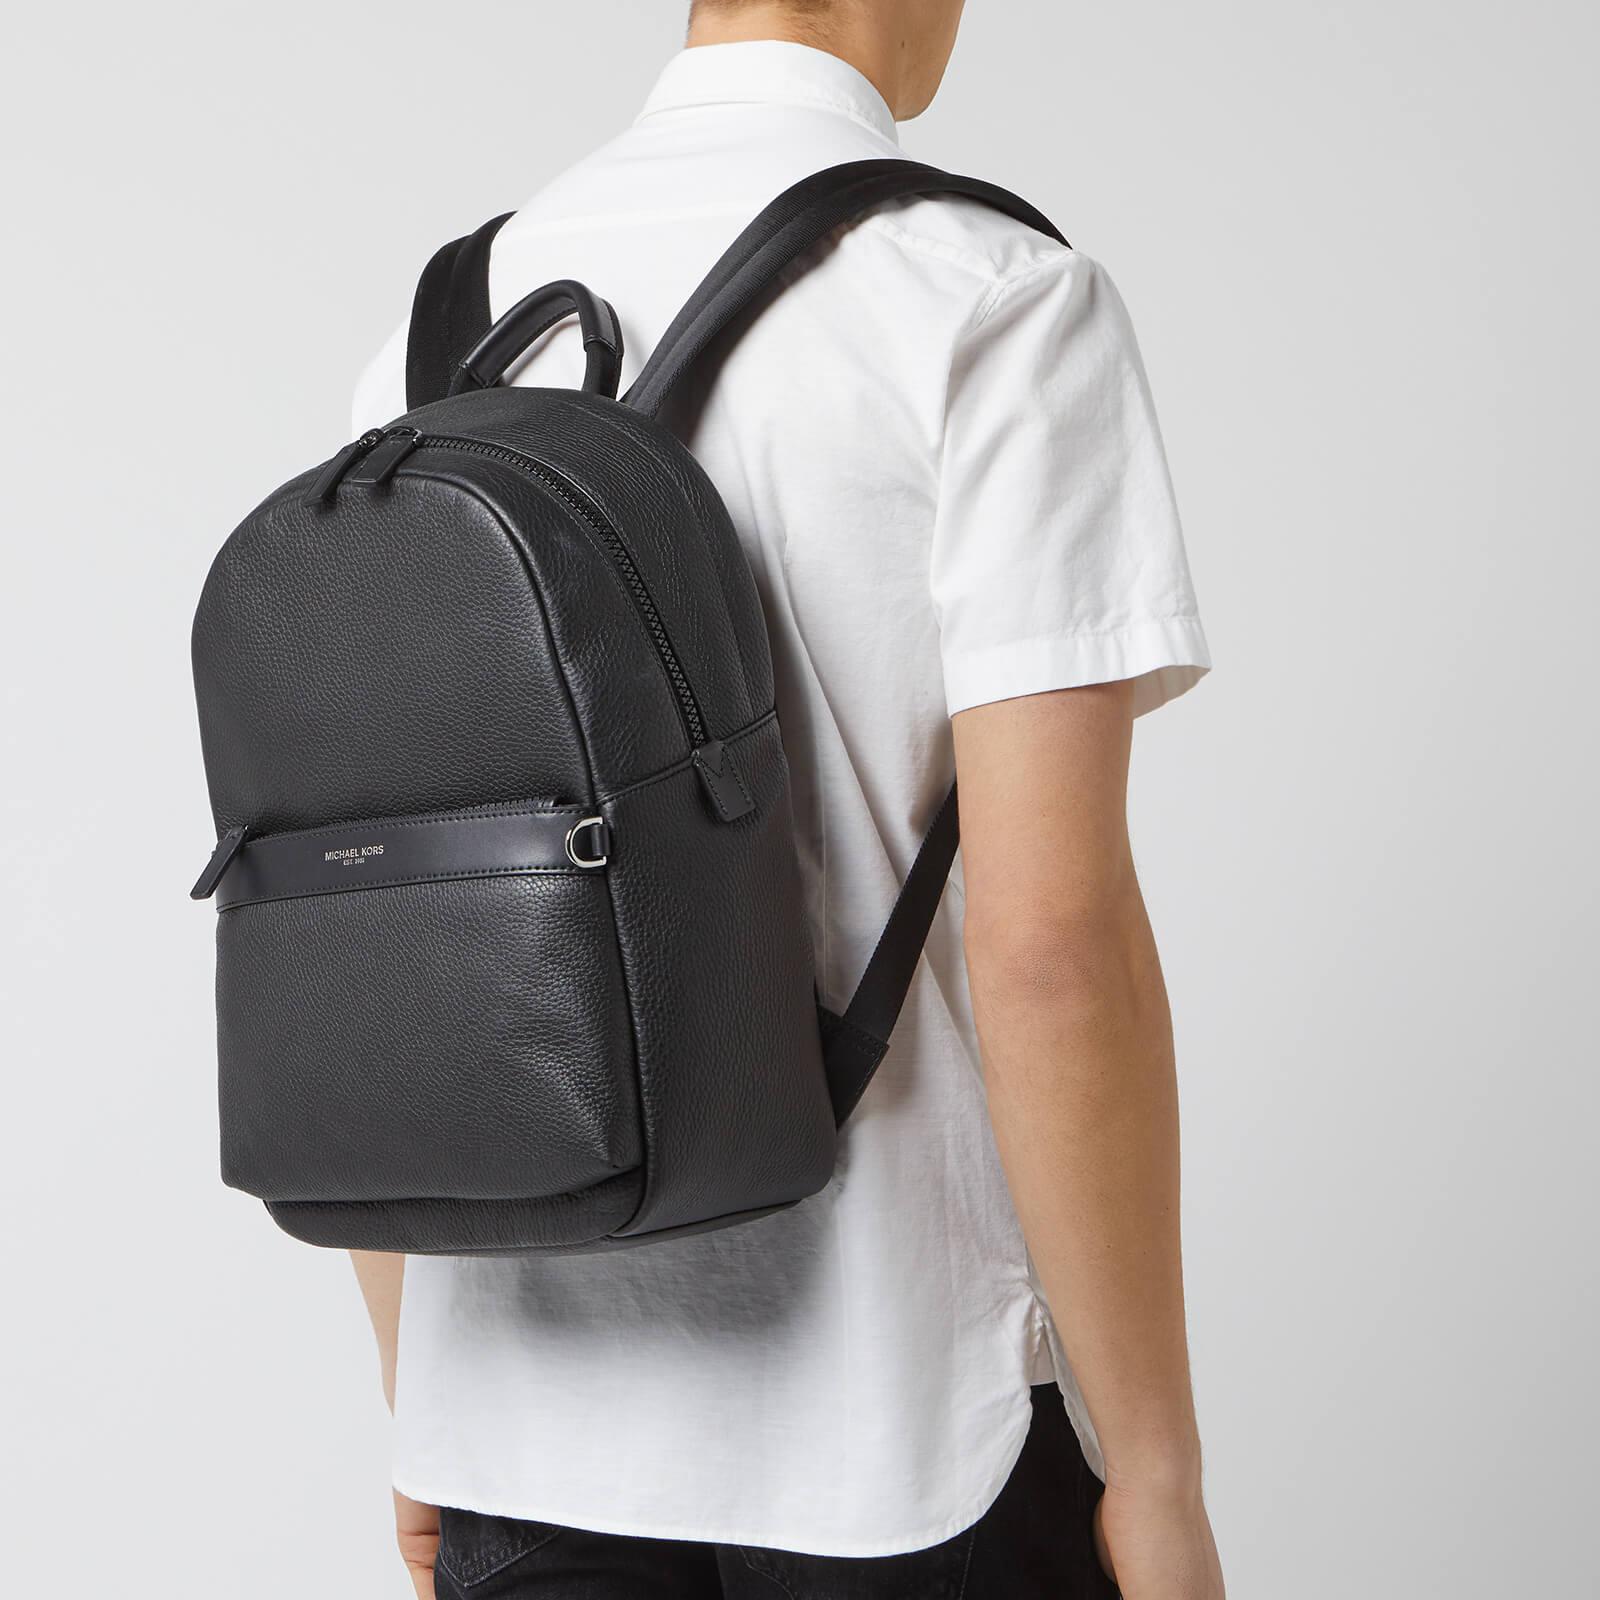 Michael Kors Greyson Pebbled Leather Backpack in Black for Men - Lyst